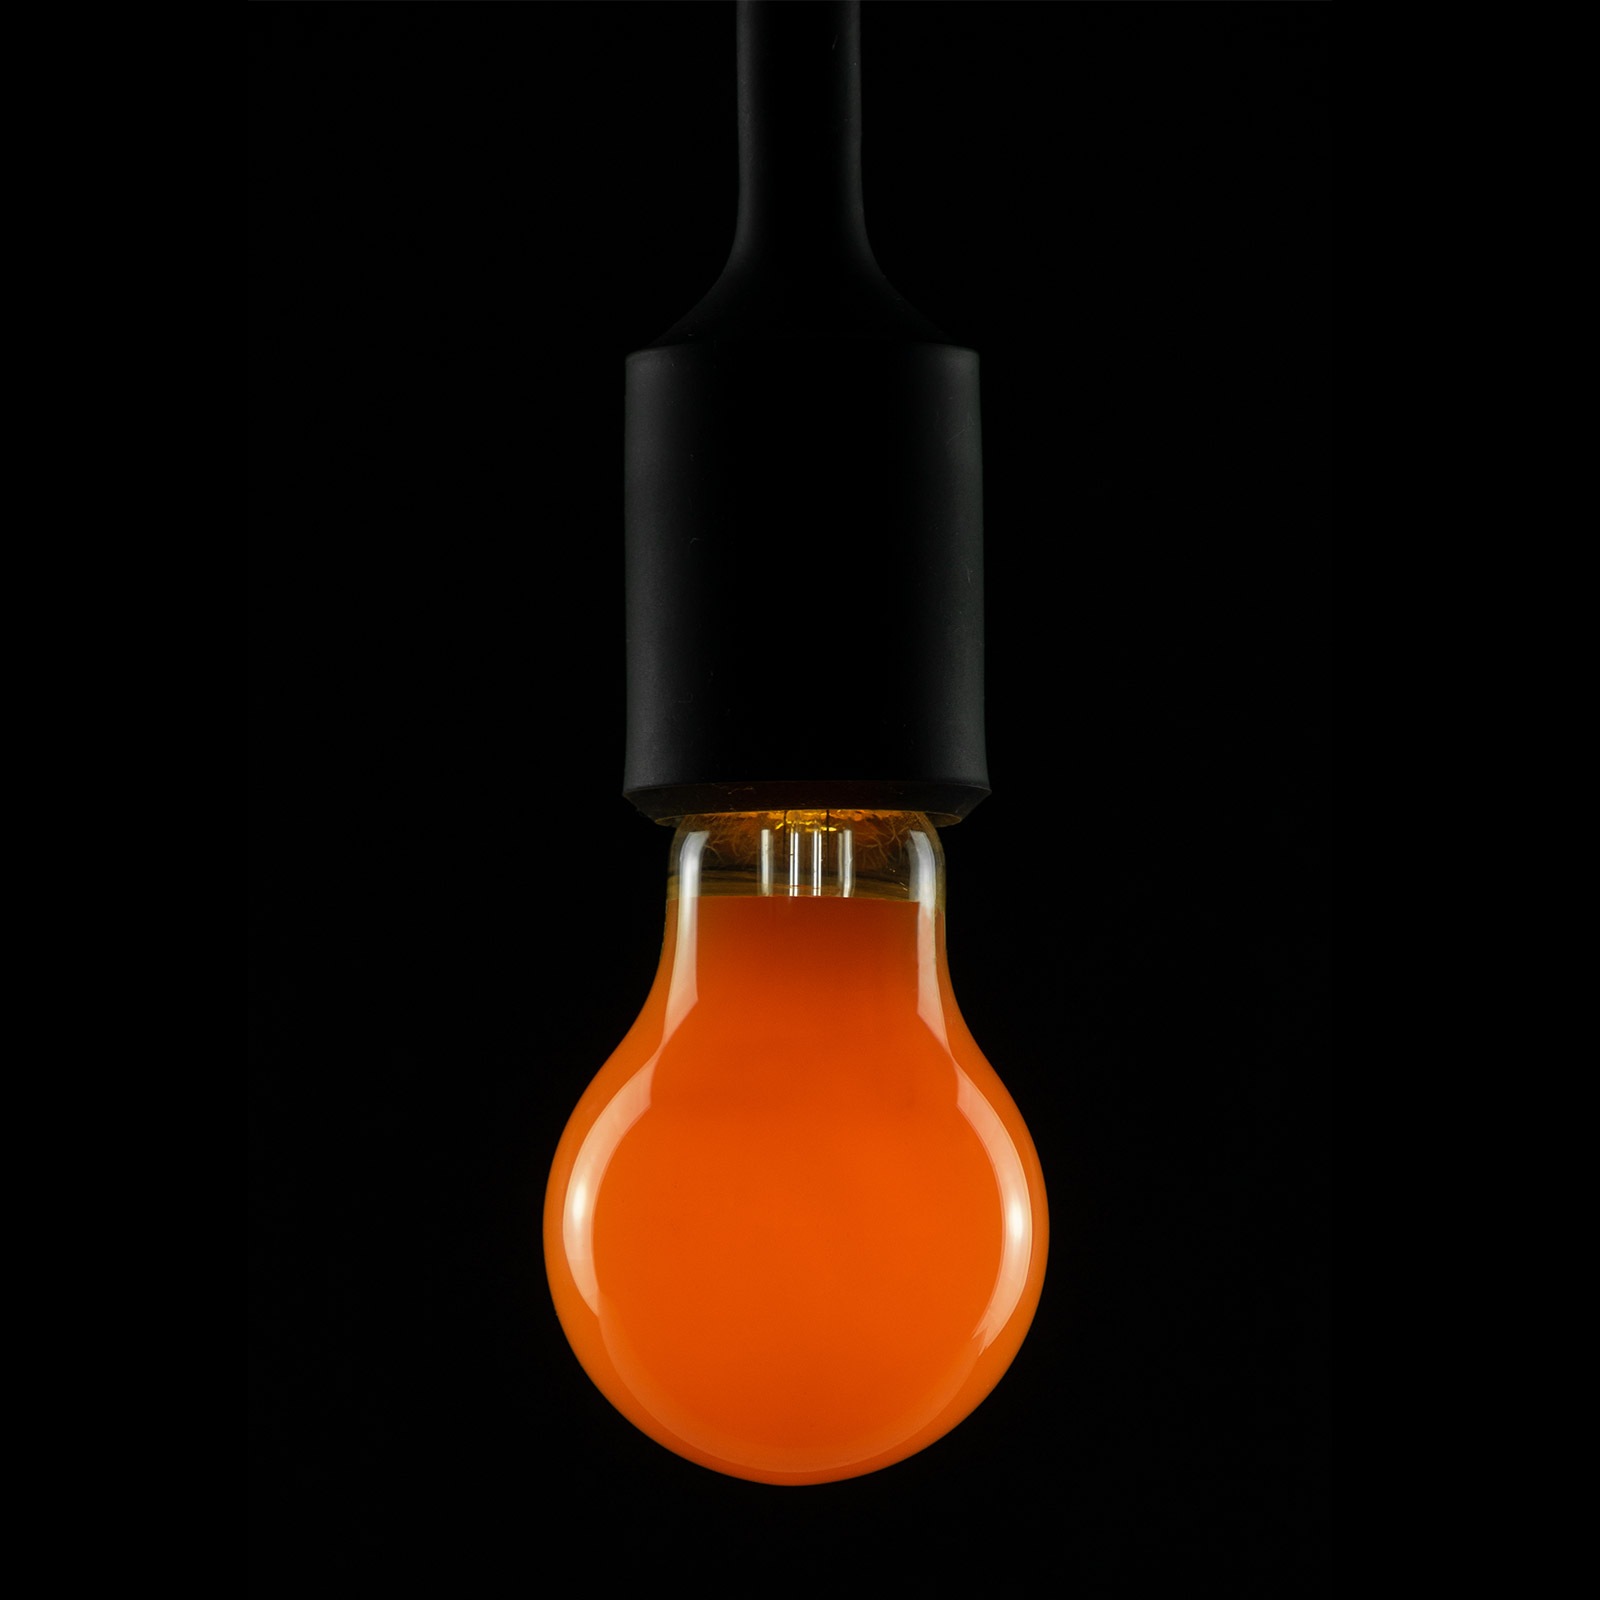 LED spuldze, oranža, E27, 2 W, ar iespēju regulēt apgaismojumu